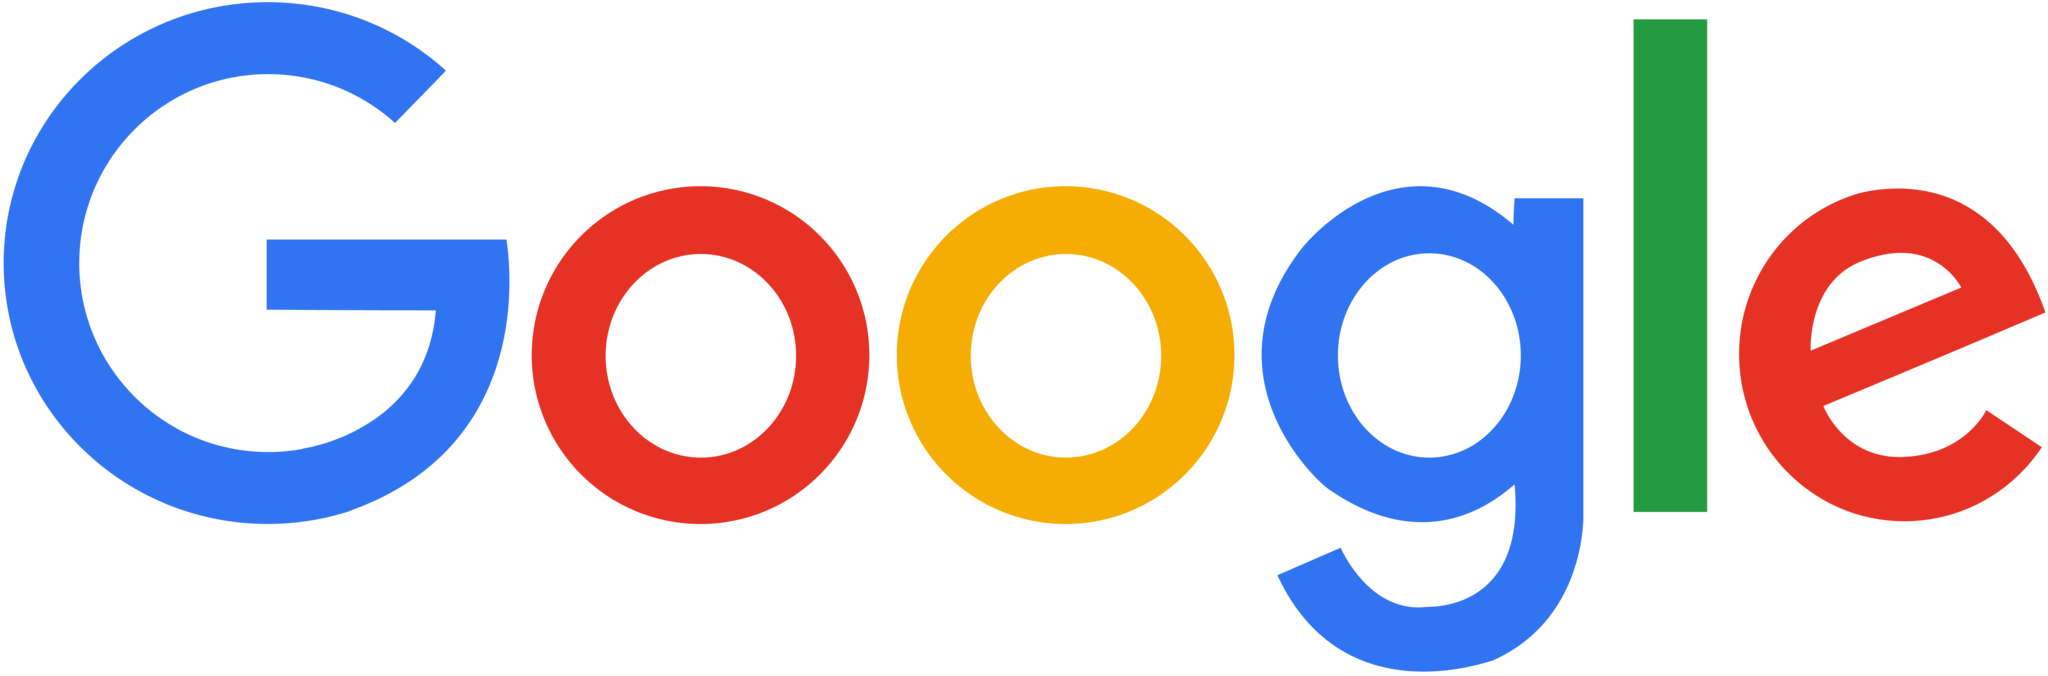 Google Logo PNG with Transparent Background High Definition pngteam.com